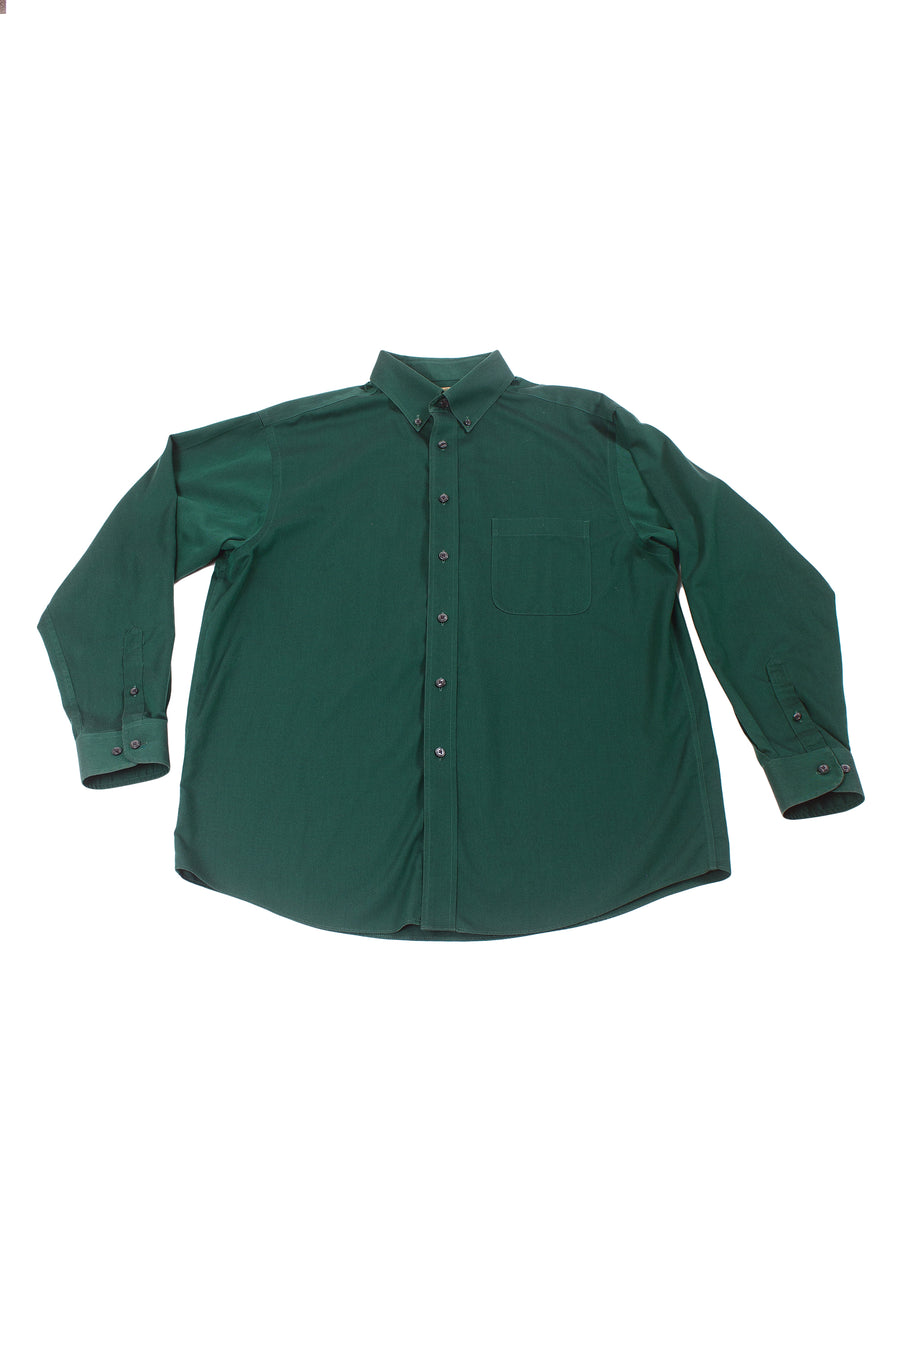 Vintage 90's Green Button Down Shirt